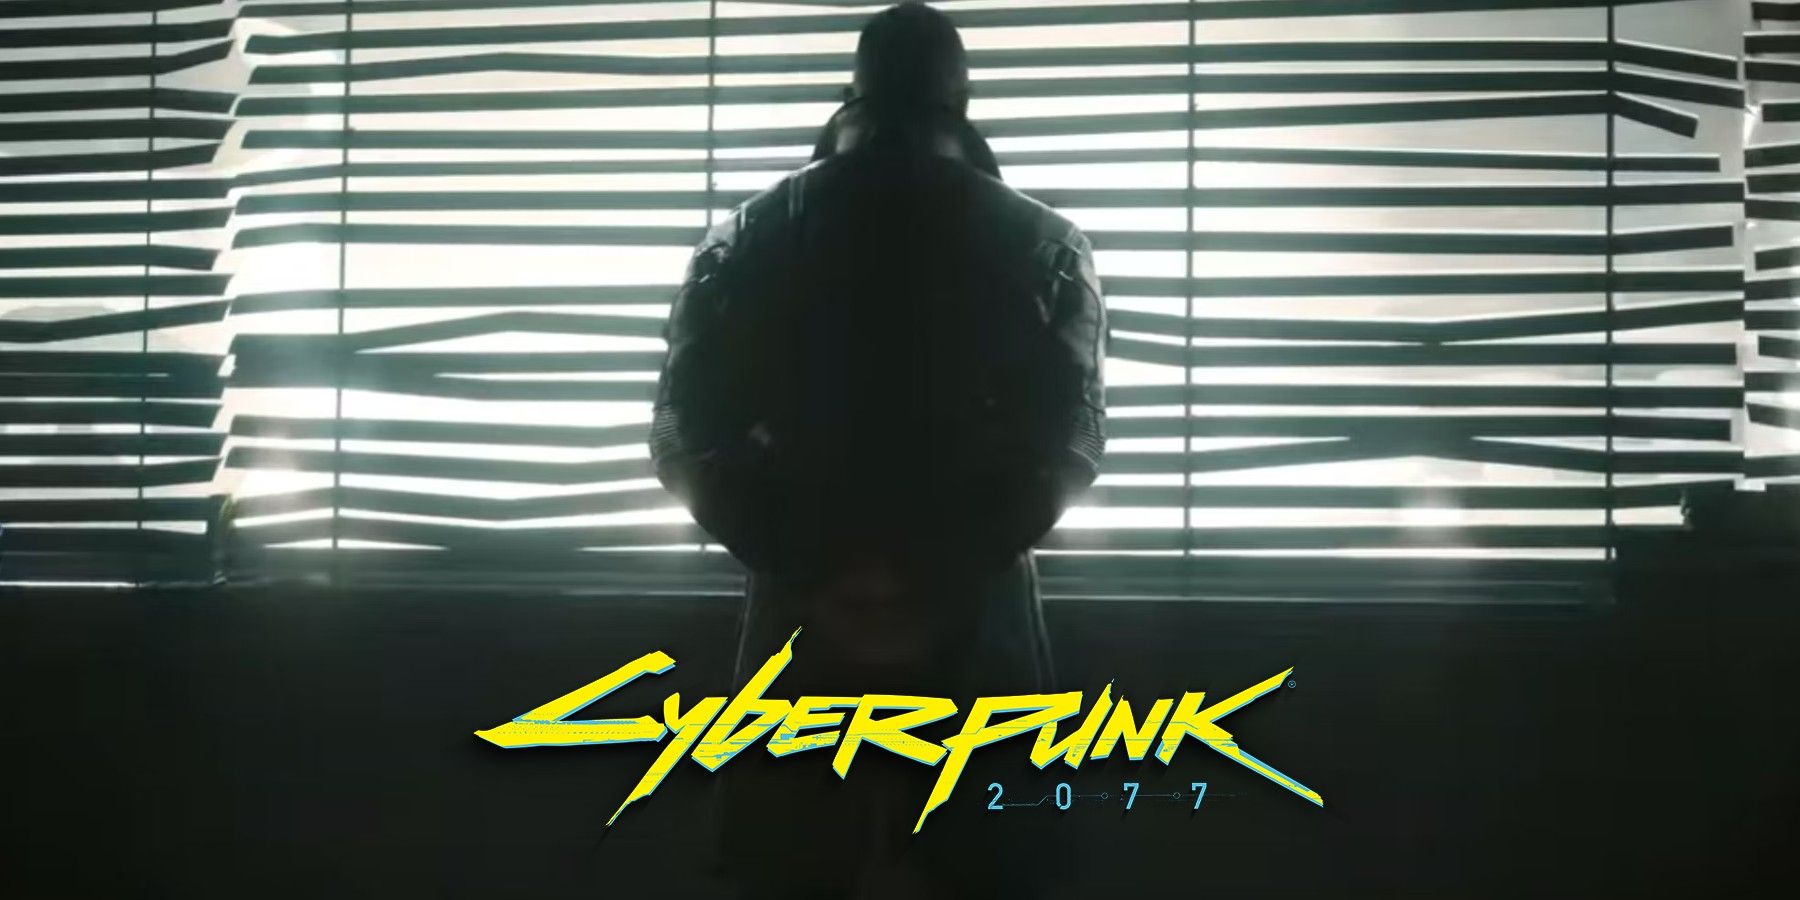 download cyberpunk 2077 phantom liberty dlc